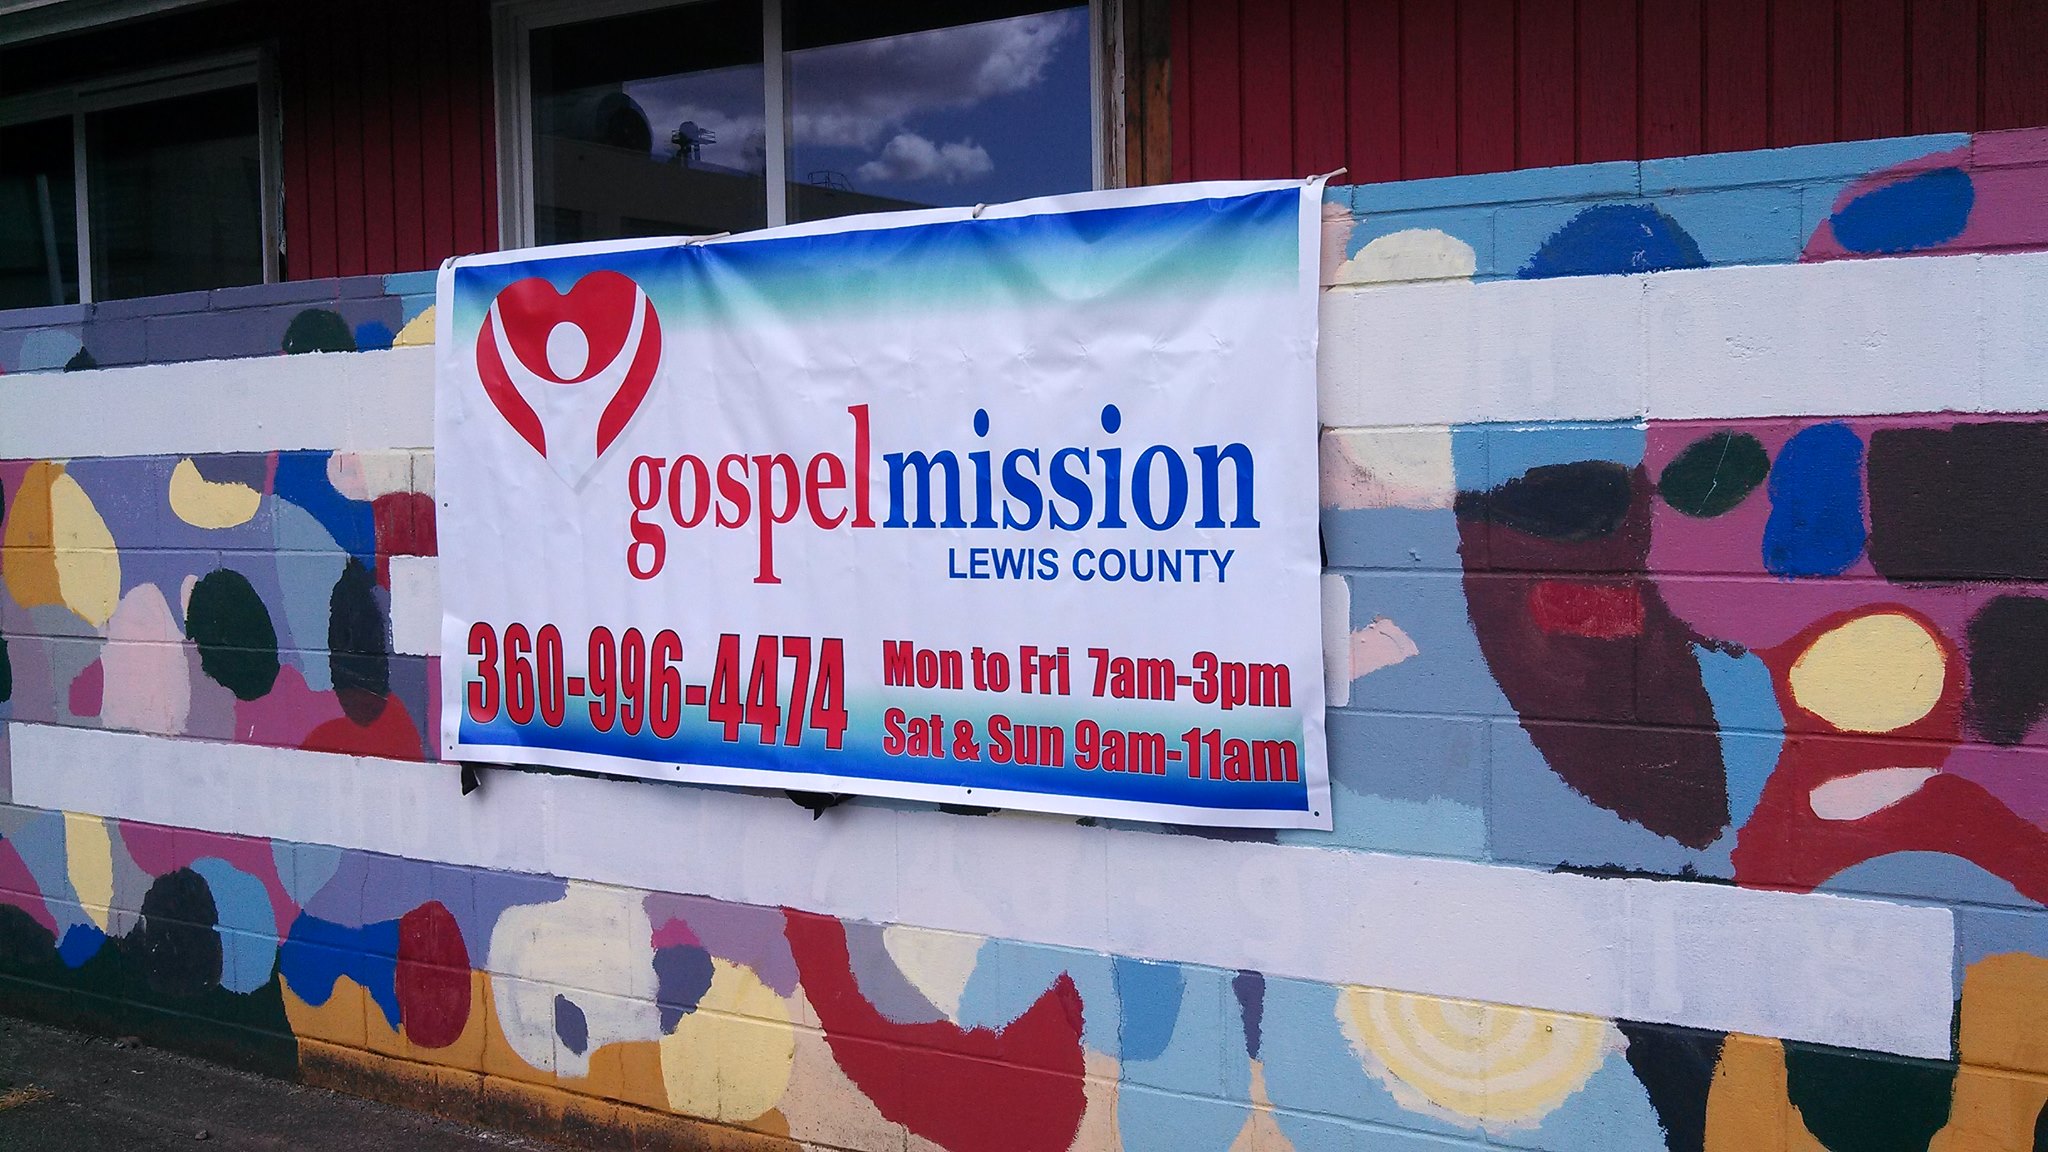 Lewis County Gospel Mission